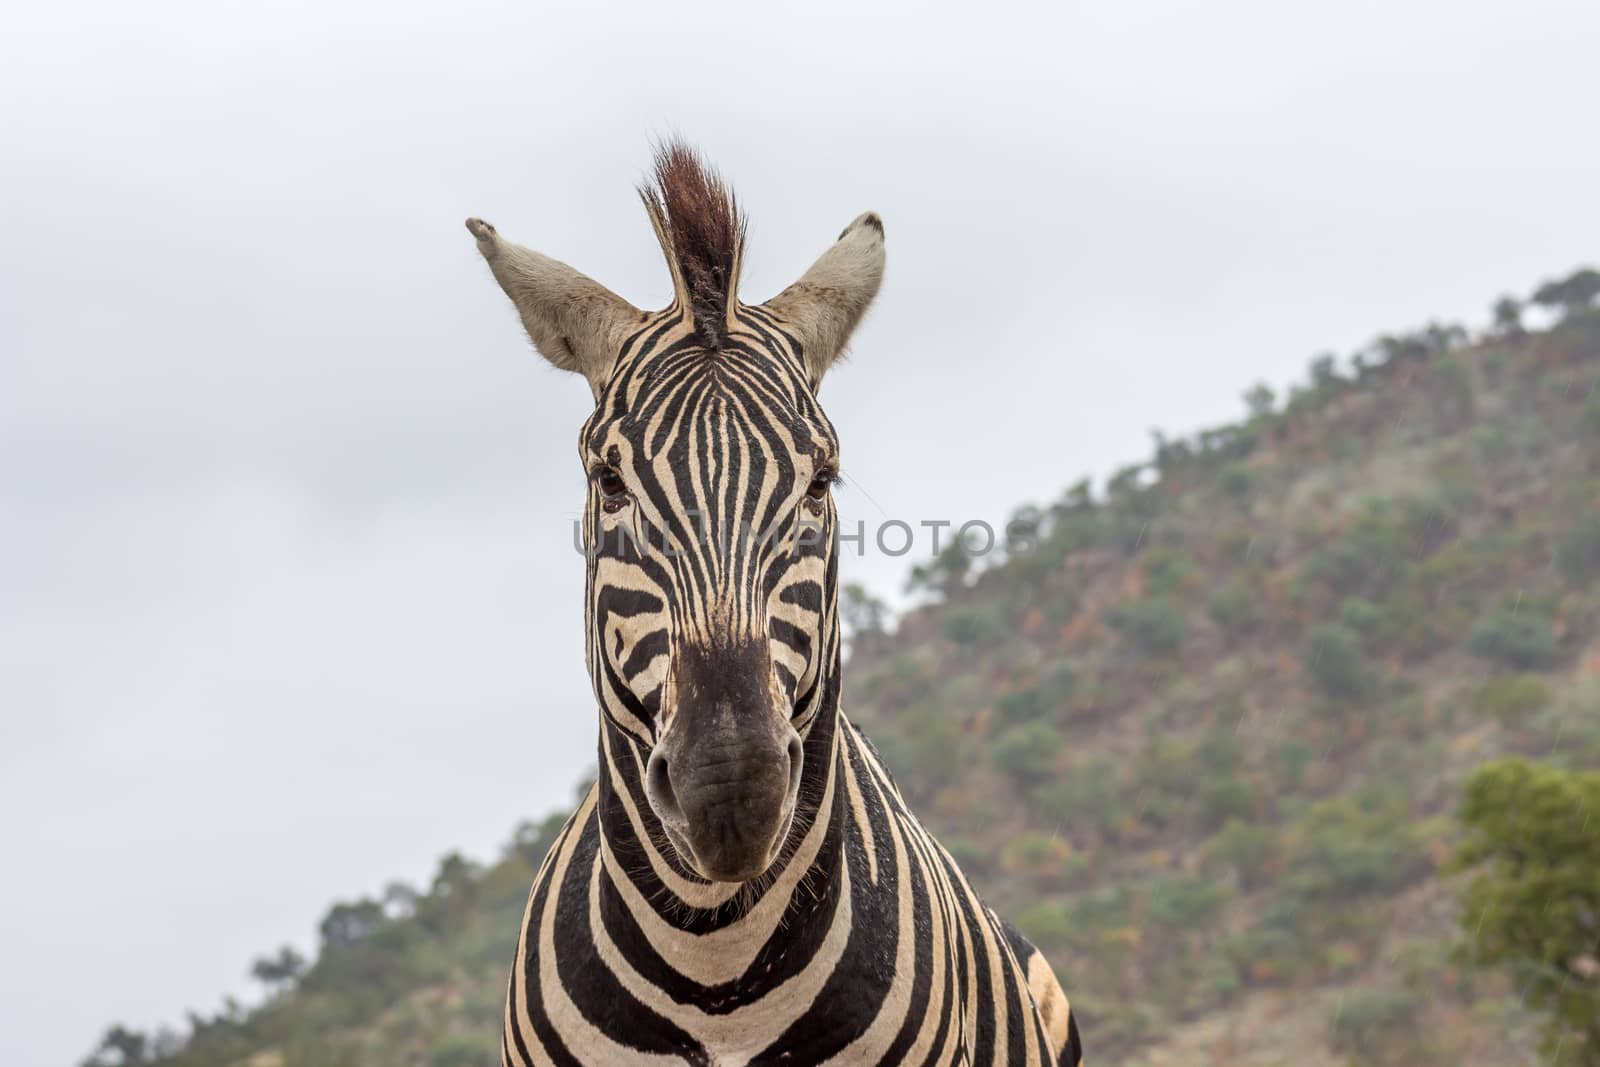 Burchels zebra in Pilanesberg National Park, South Africa